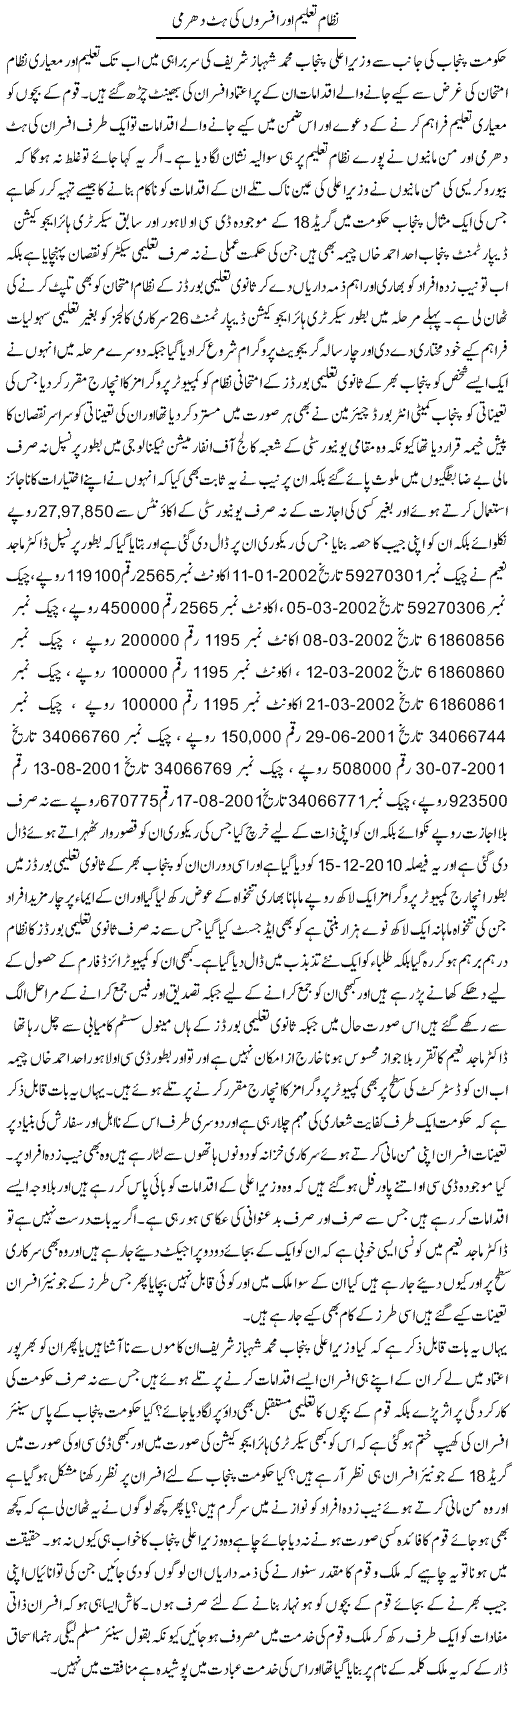 Educational System Express Column Yousaf Abbasi 20 February 2011